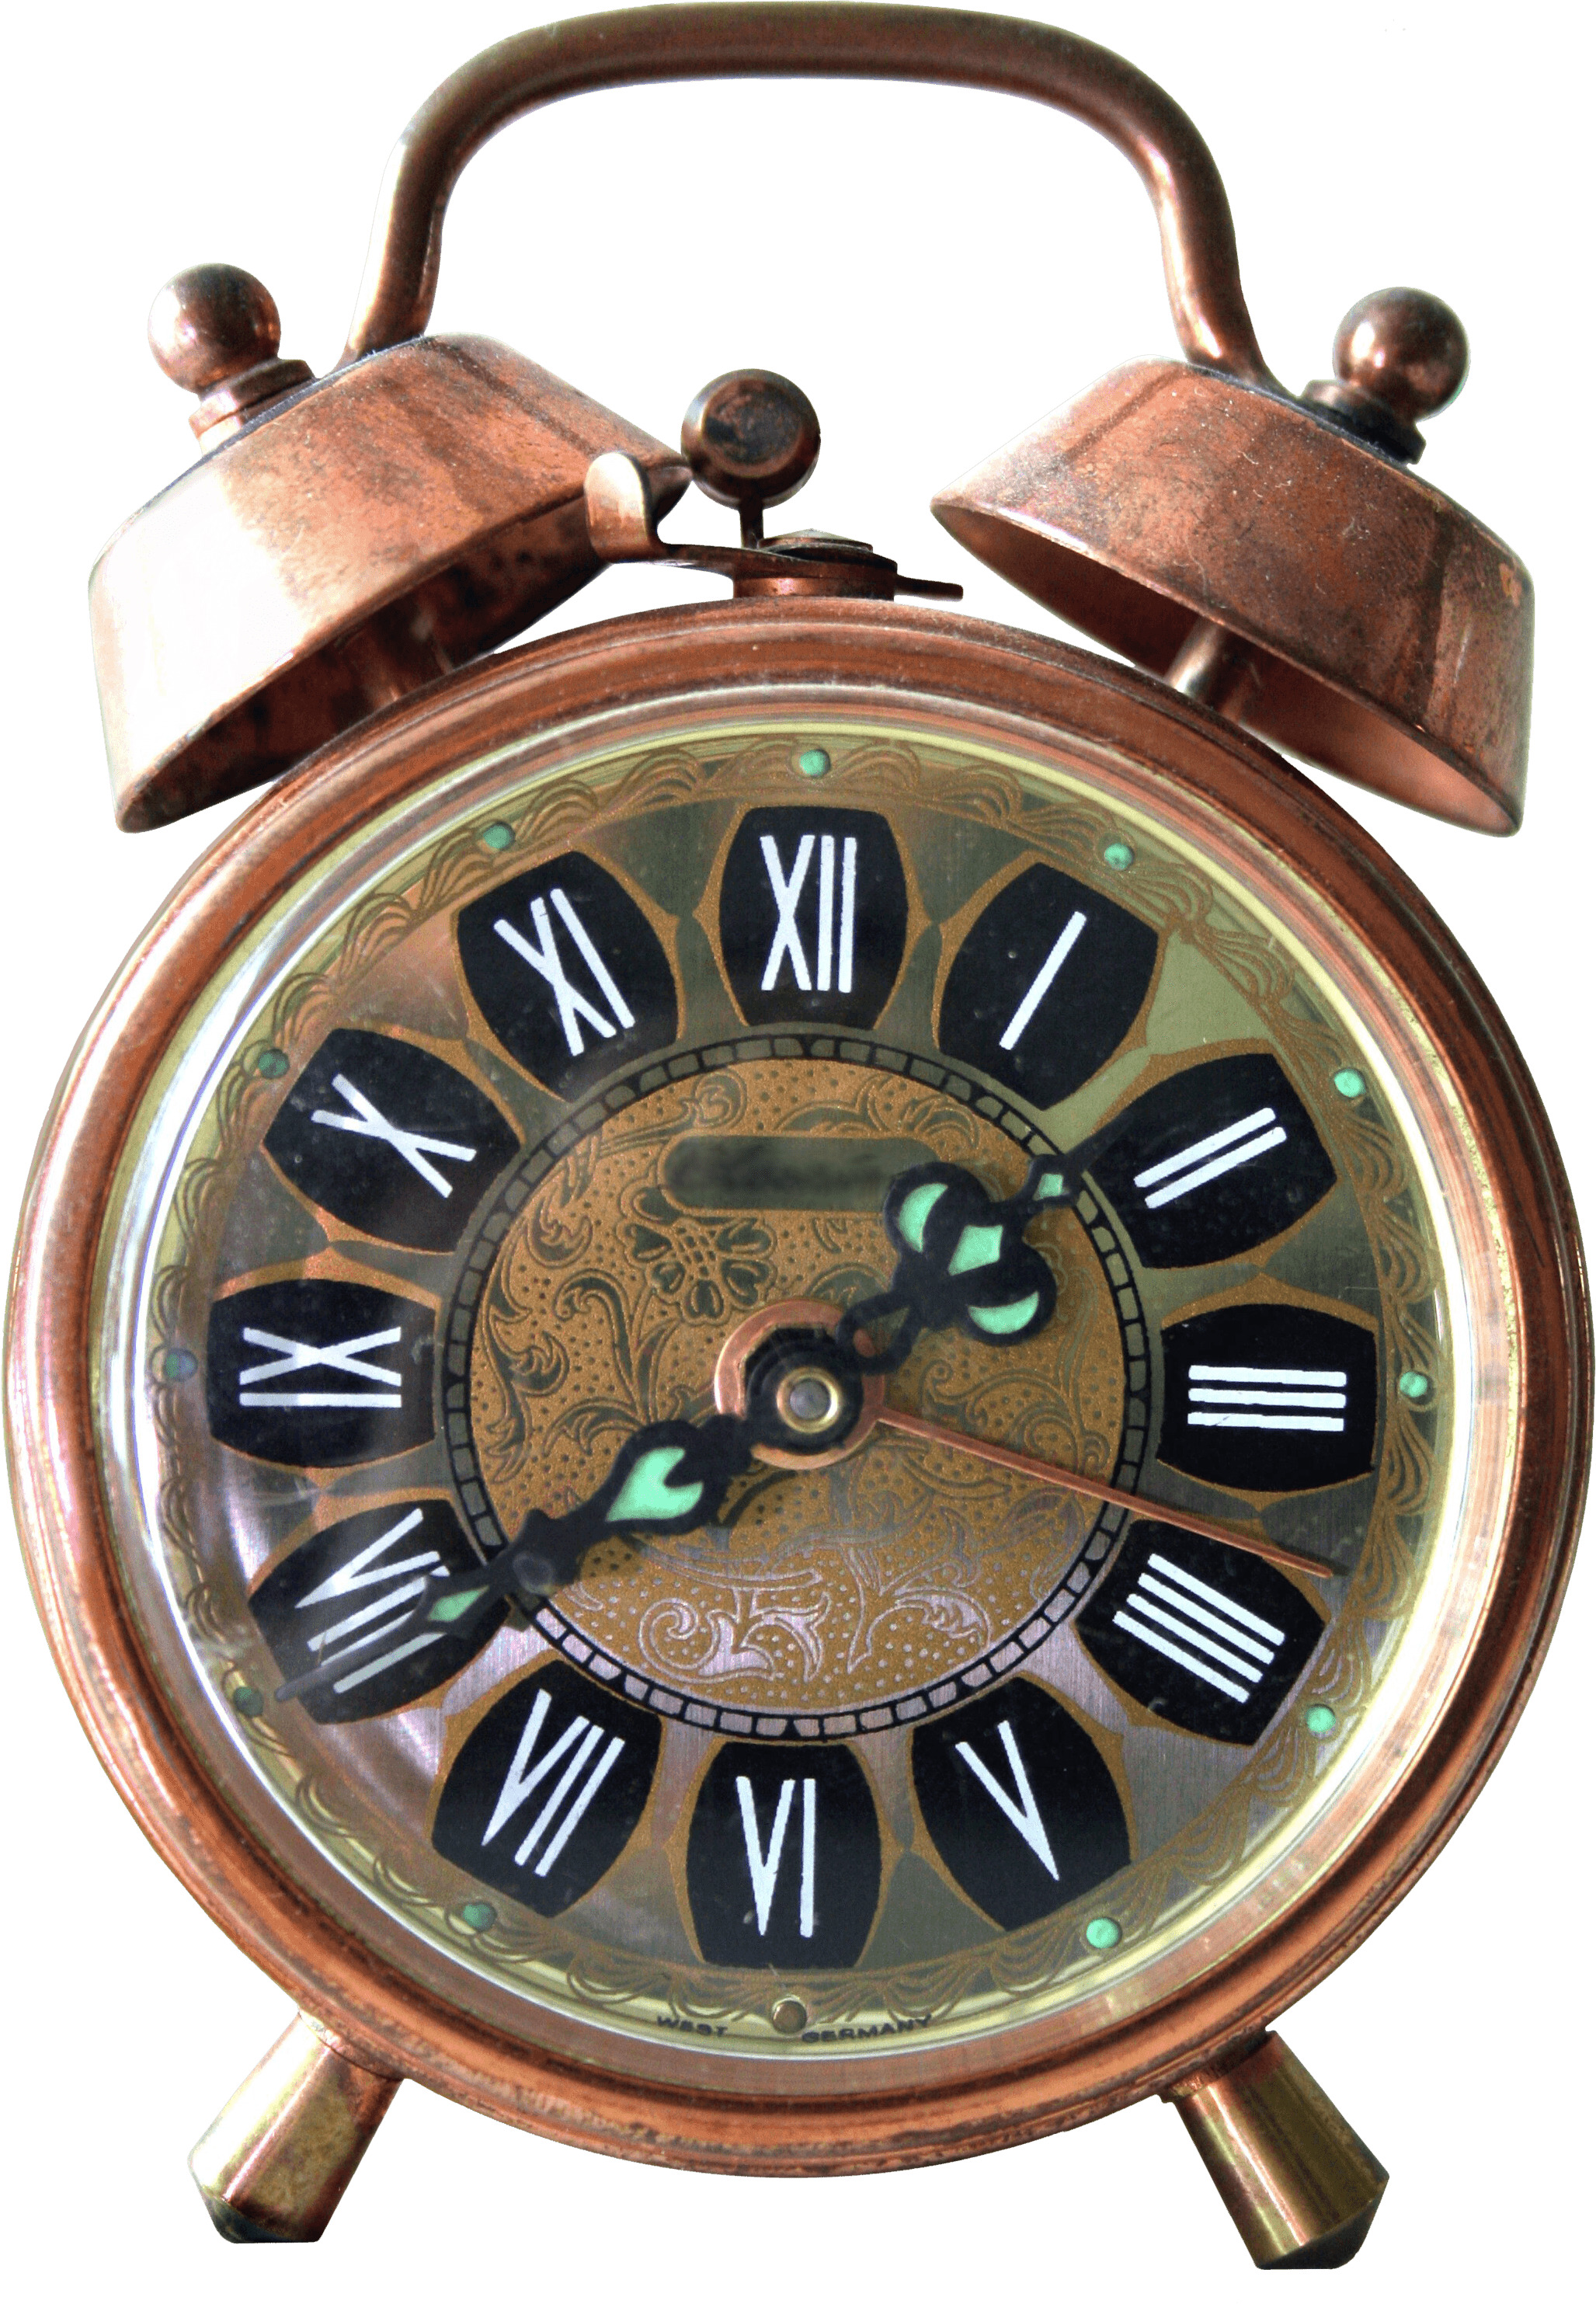 Vintage Alarm Clock icons